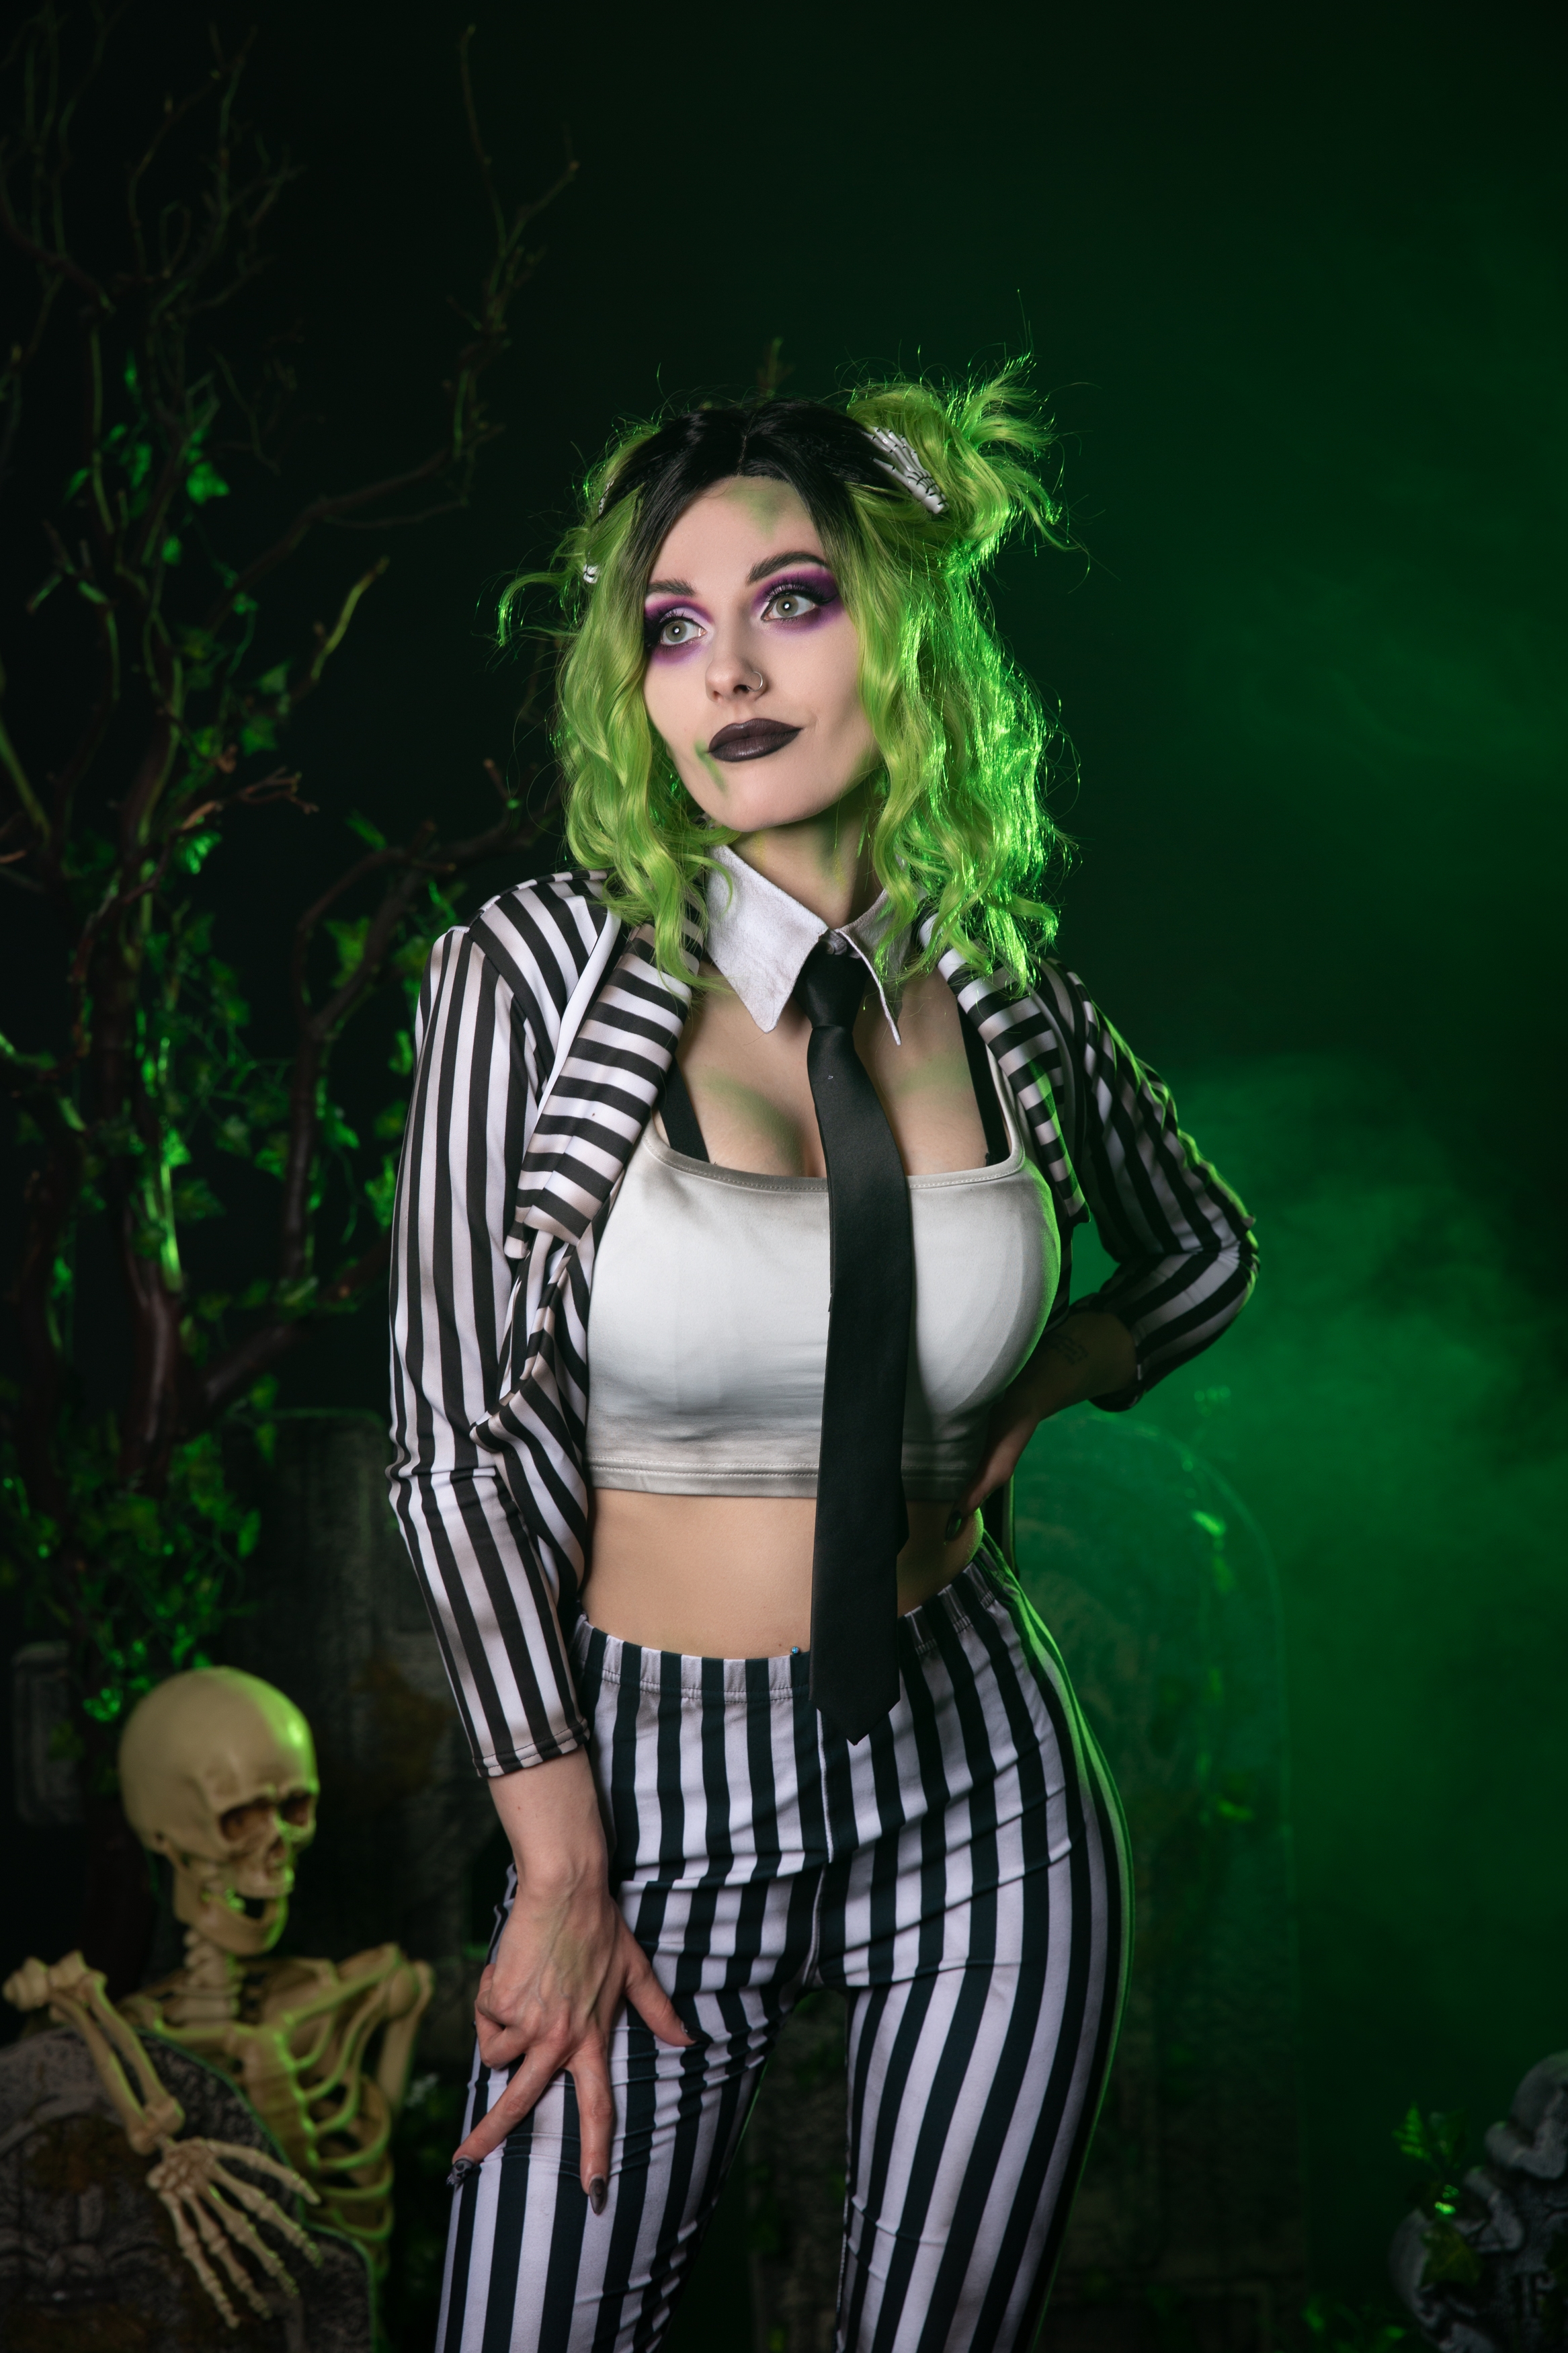 Women Model Halloween Cosplay Beetlejuice Striped Clothing Tie Crop Top Skeleton Skull Studio 2333x3500